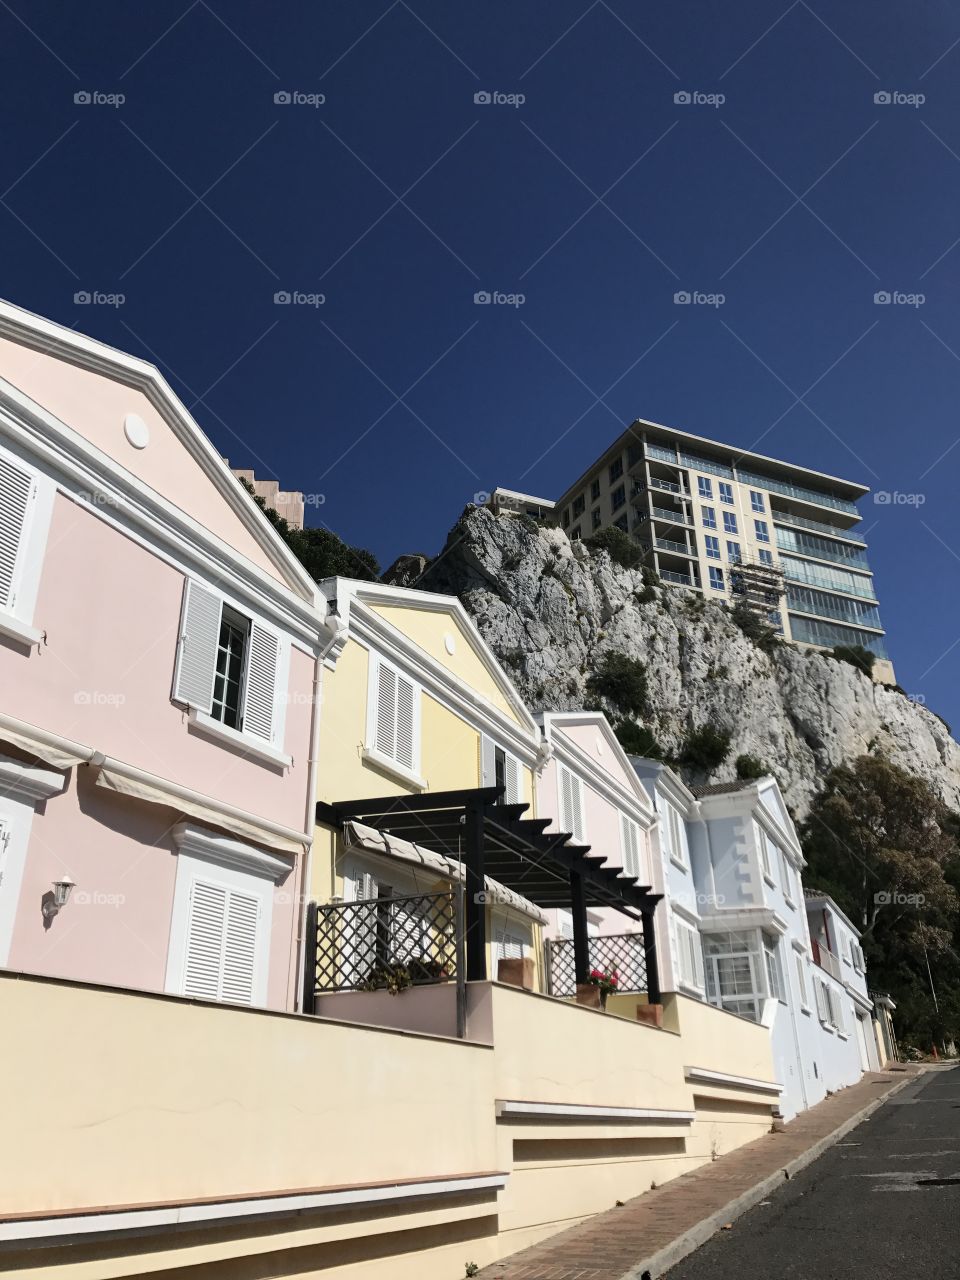 Gibraltar homes, travel to paradise 